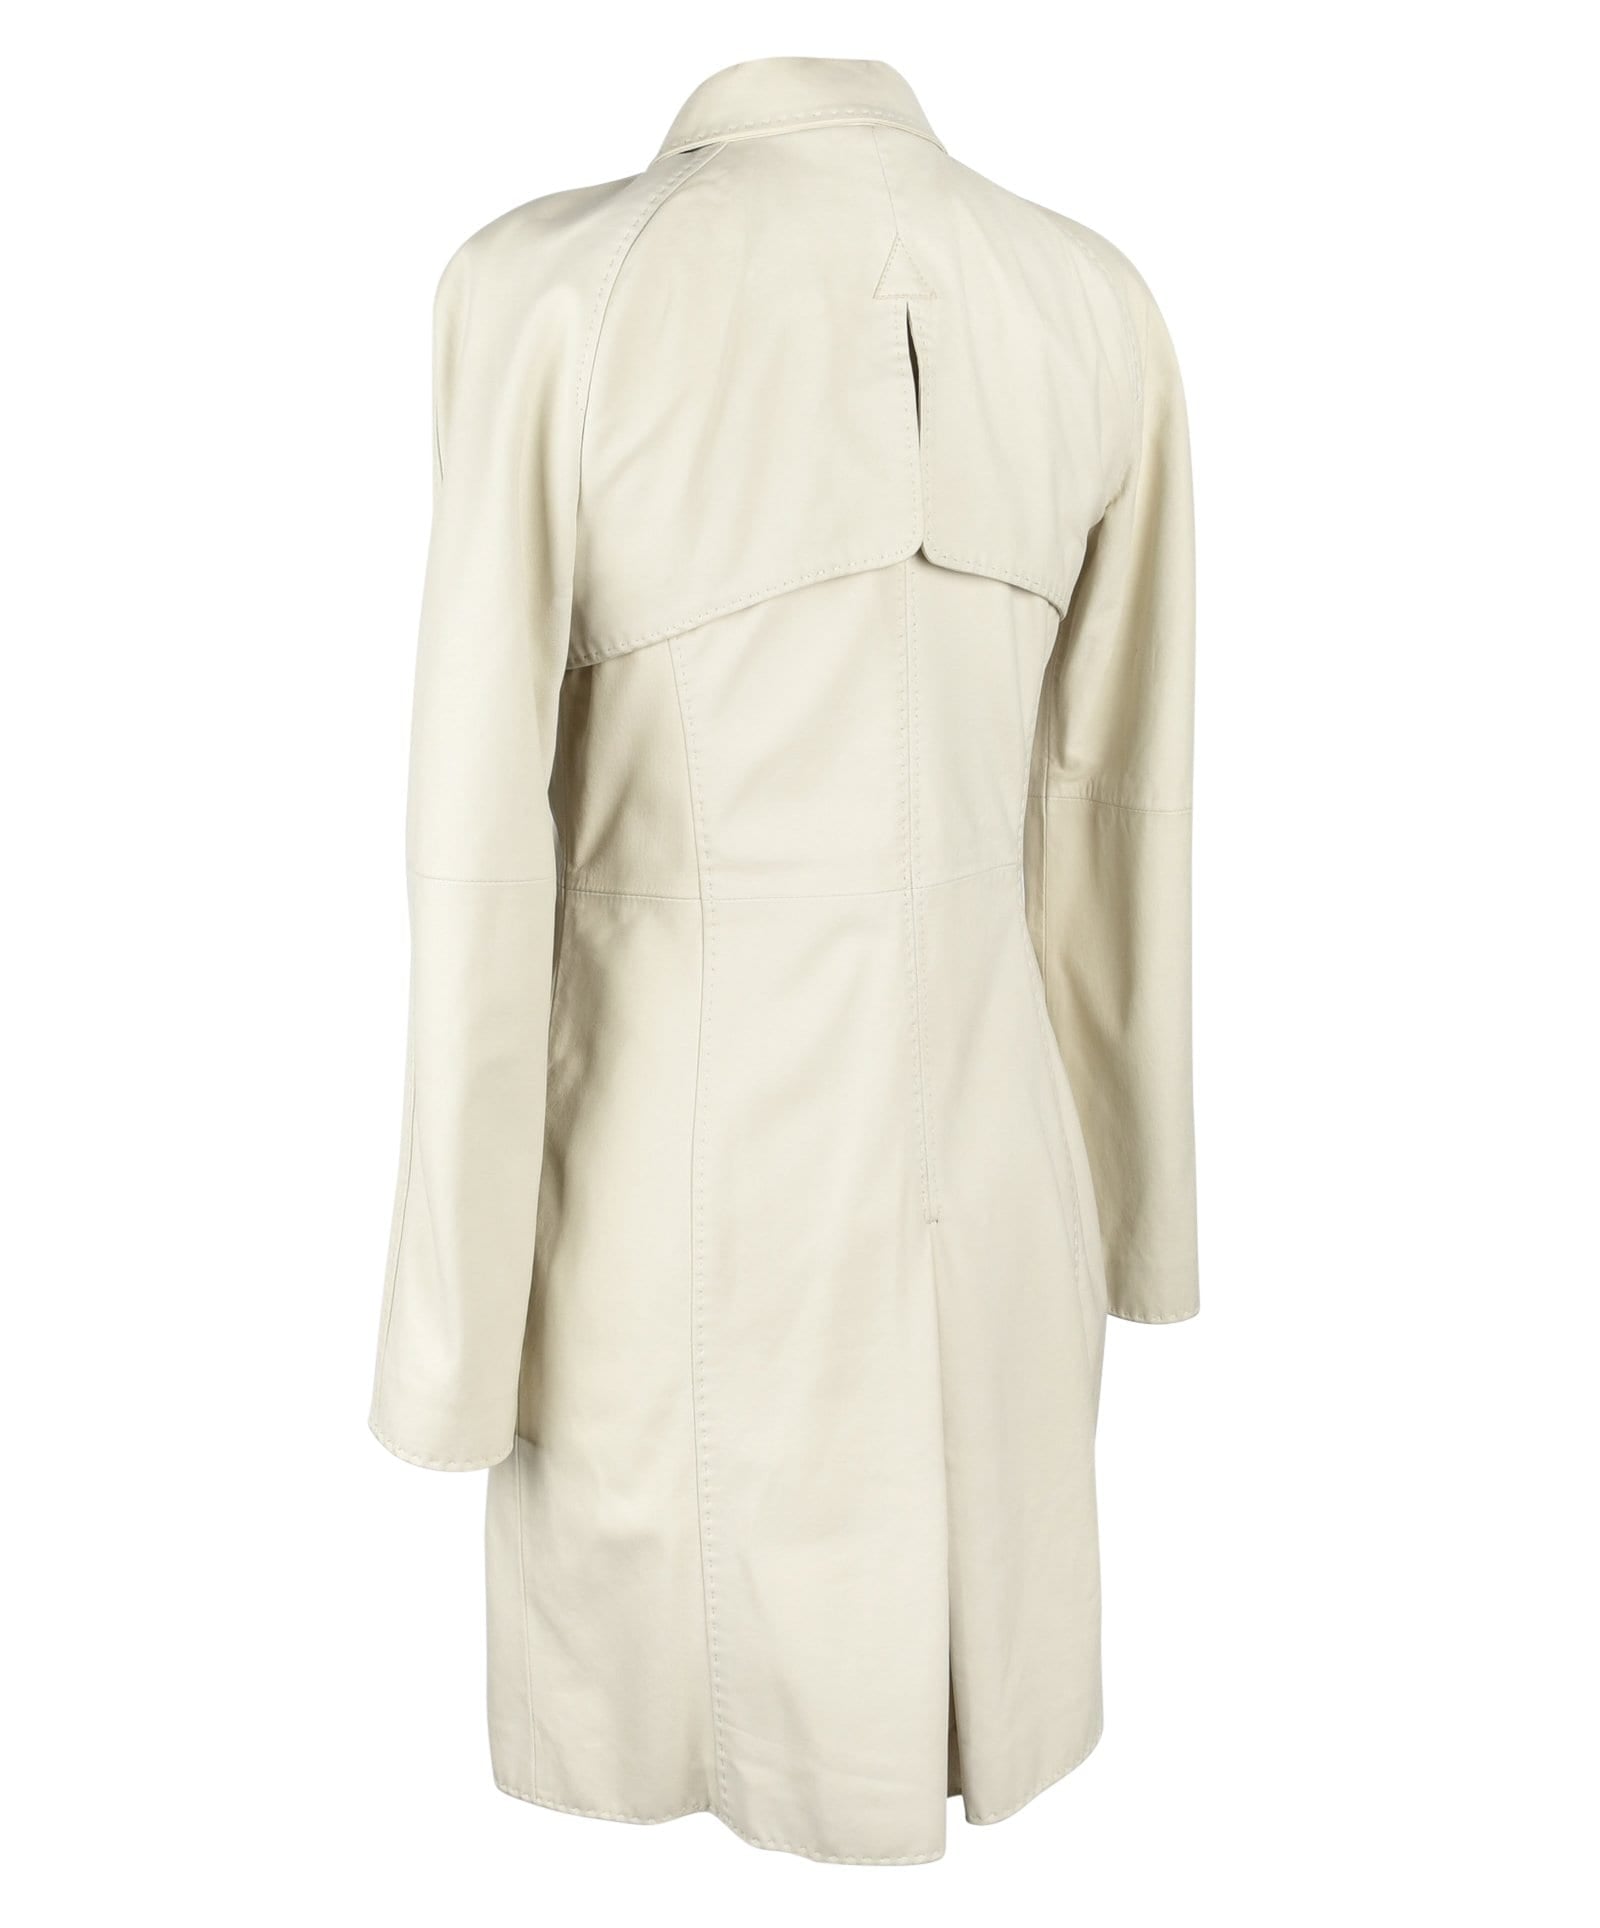 Giorgio Armani Coat Lambskin Leather Winter White 38 / 6 nwt - mightychic